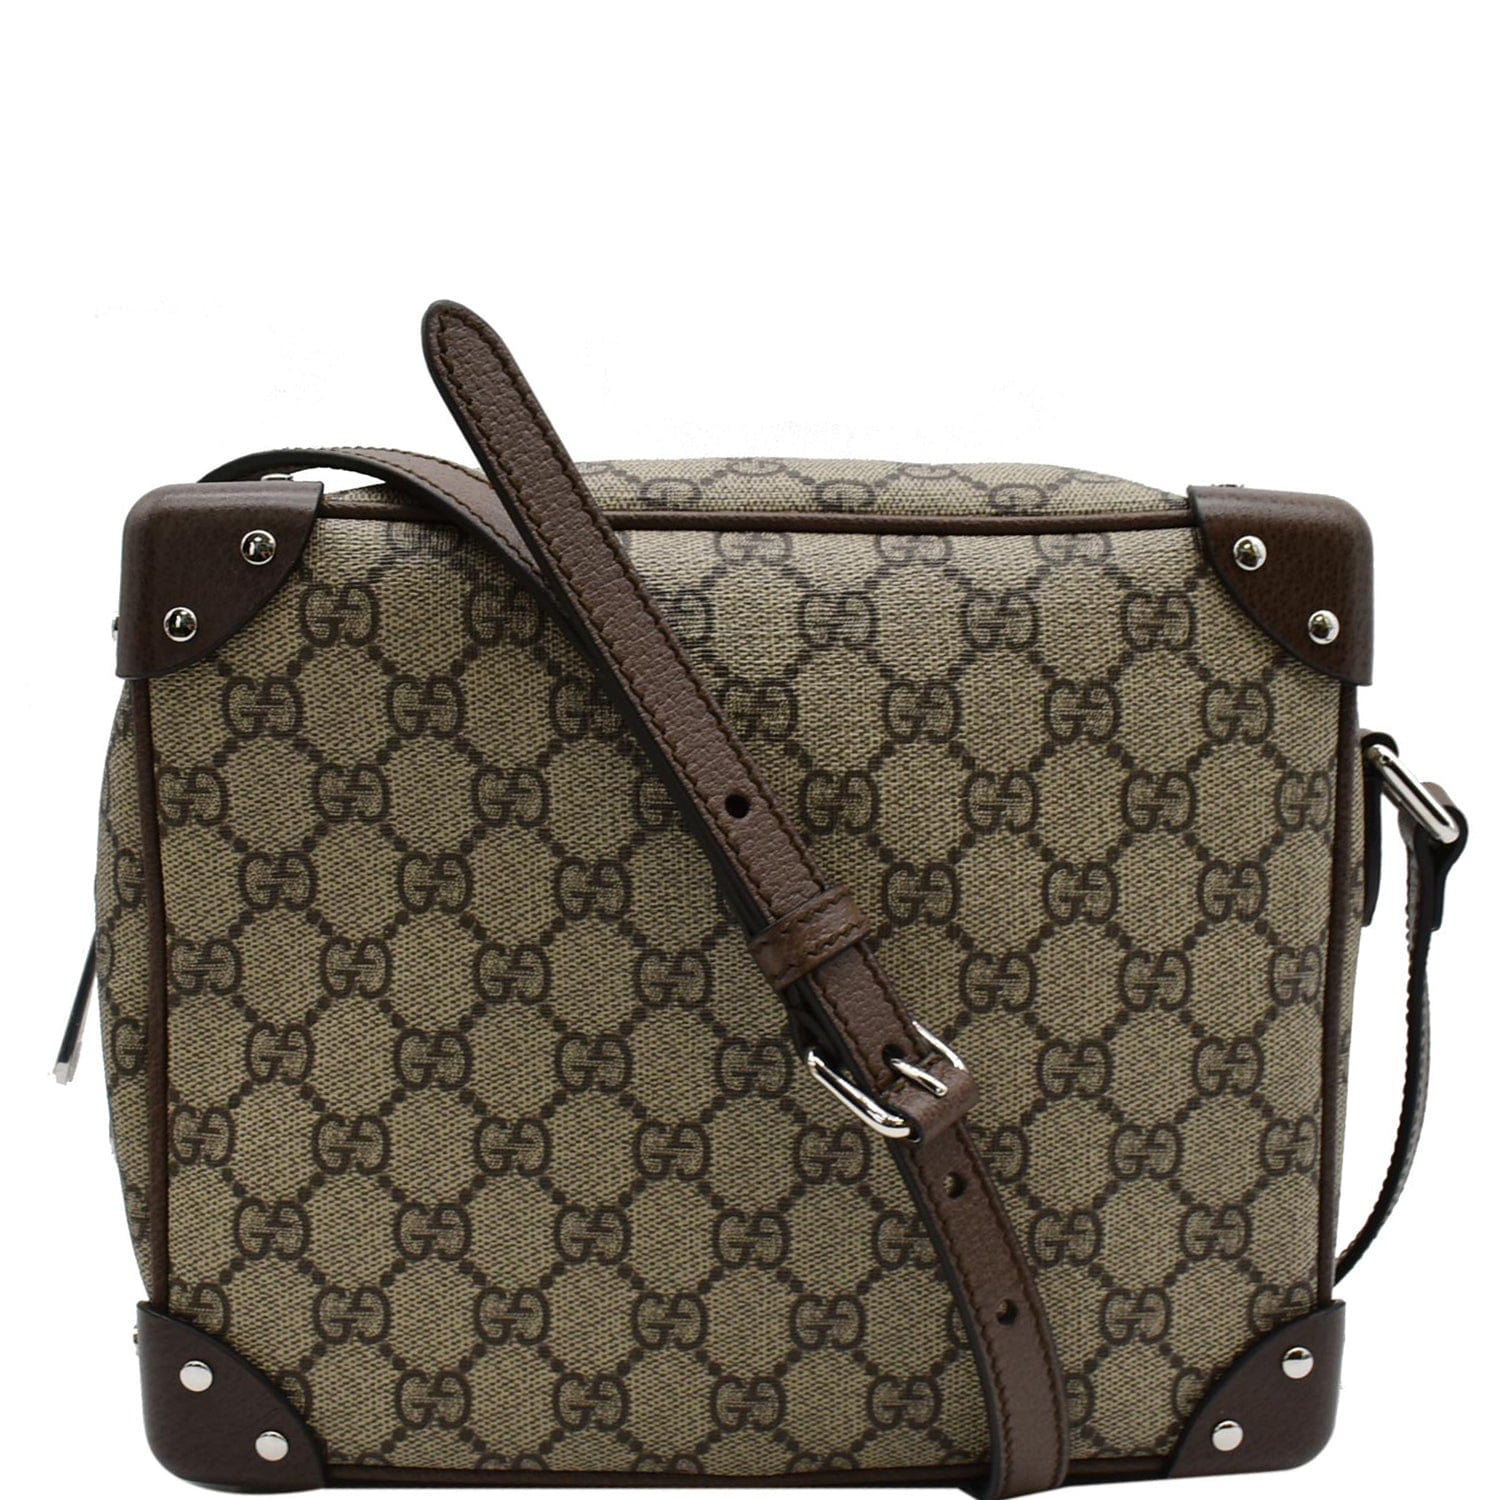 Gucci Monogrammed shoulder bag, Women's Bags